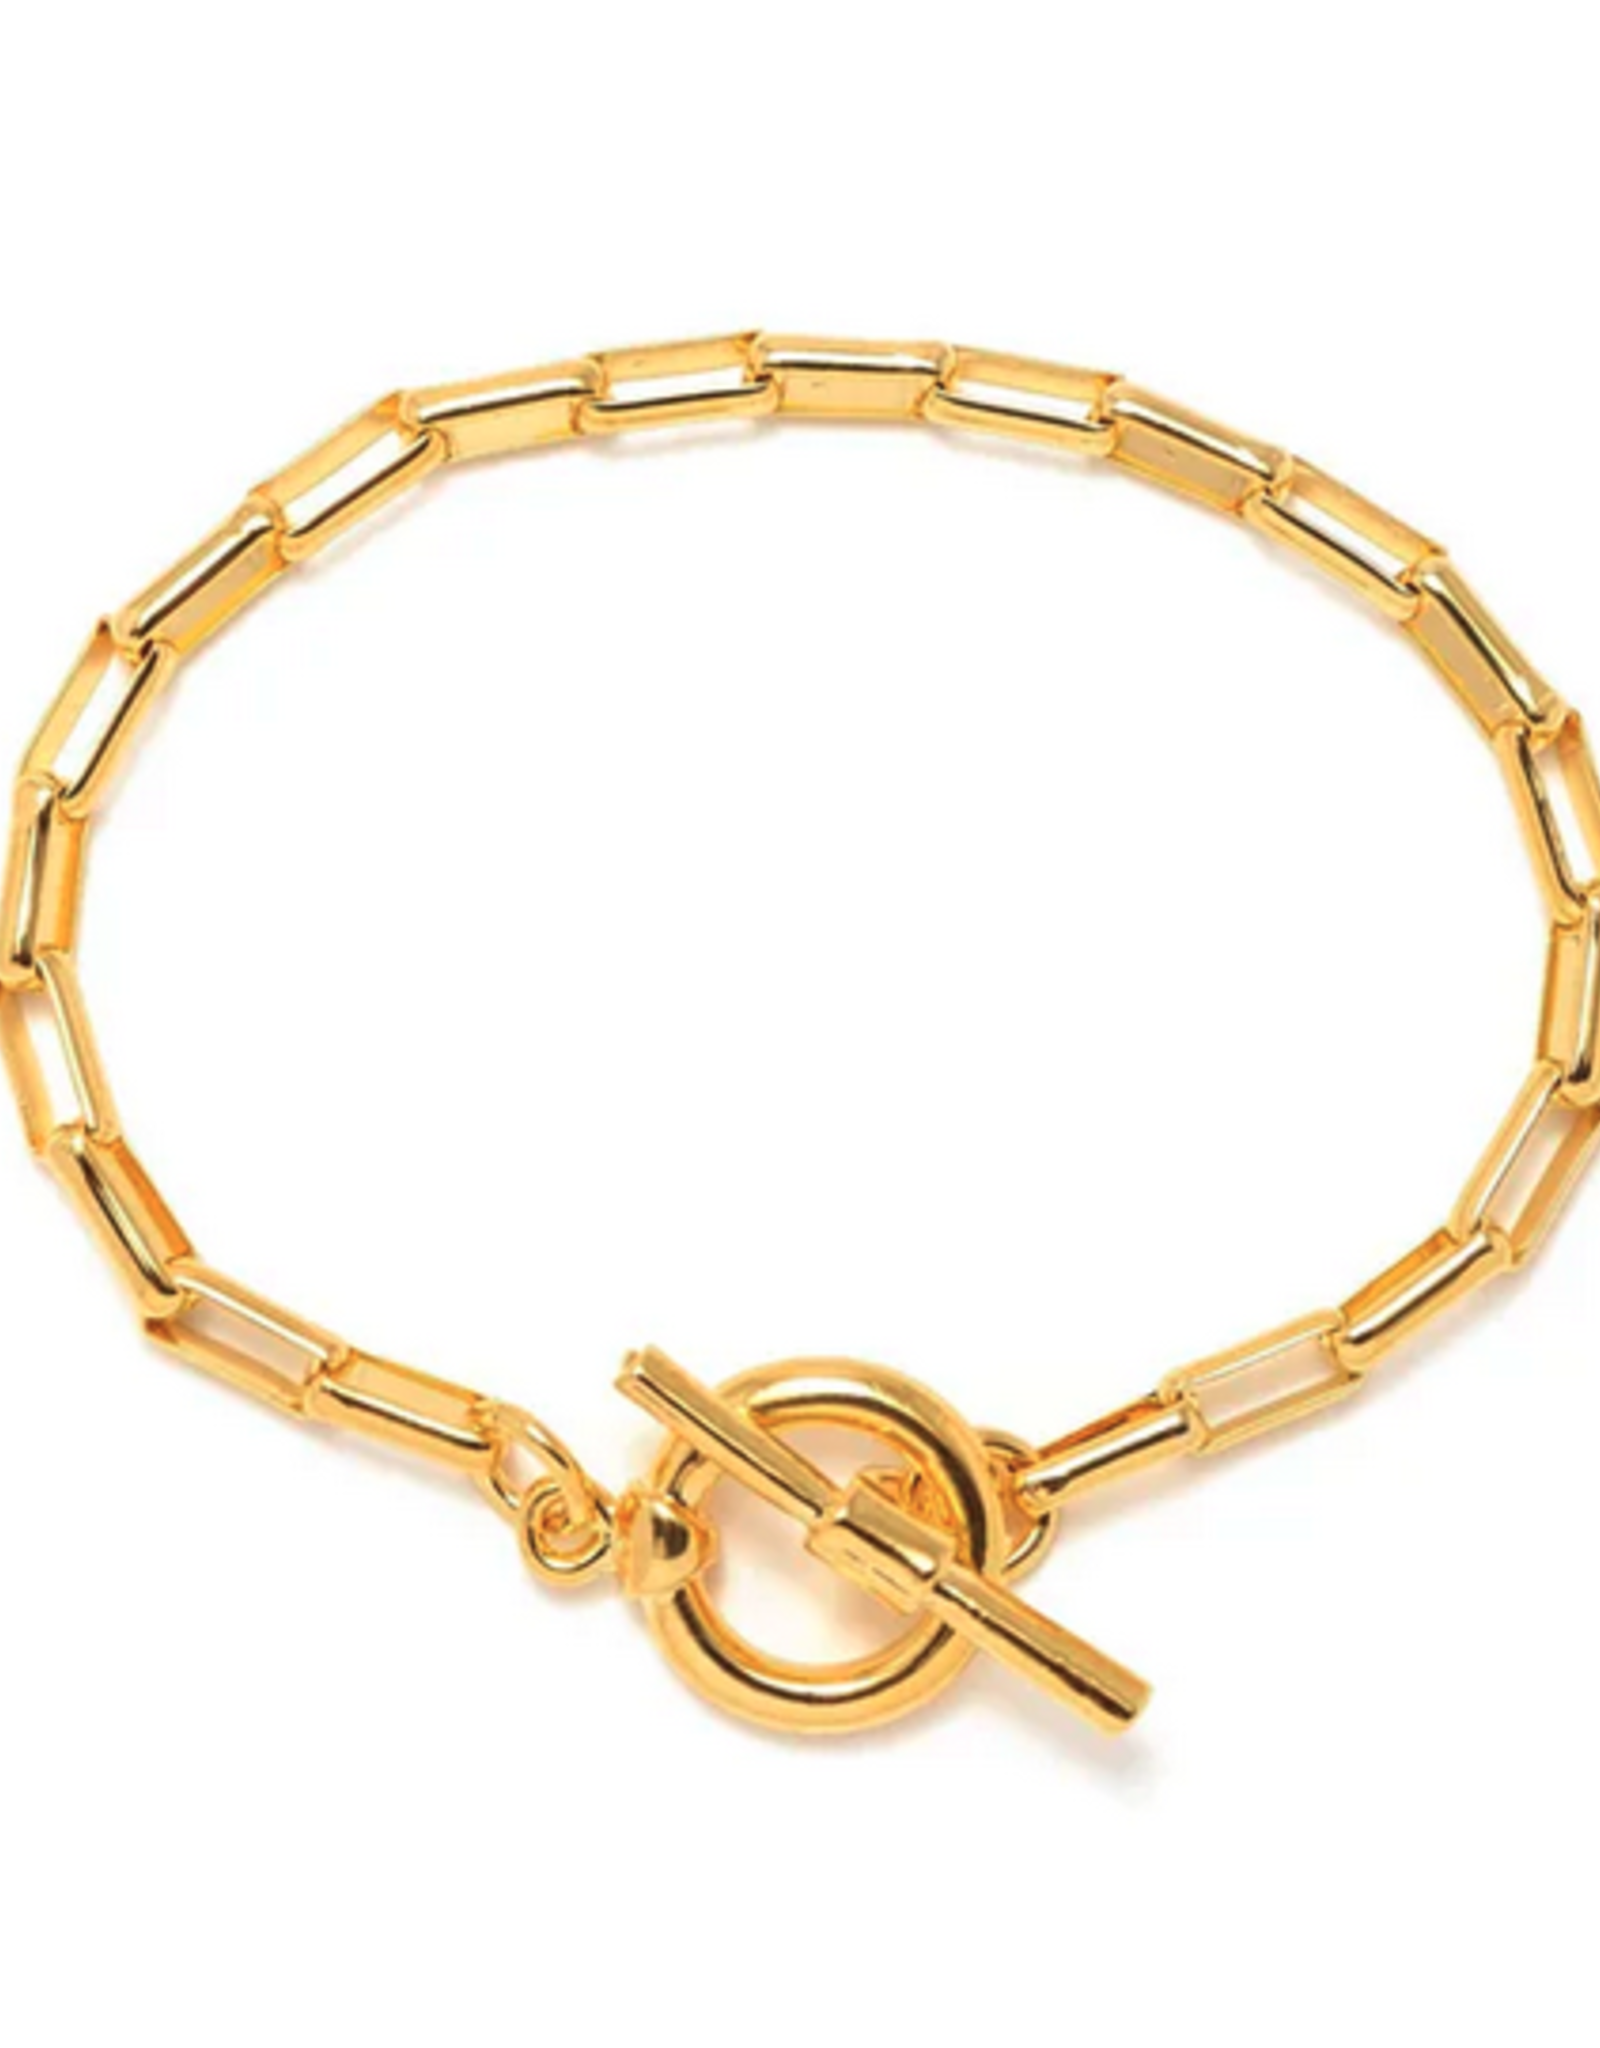 8" Staple Chain Toggle Bracelet - Gold